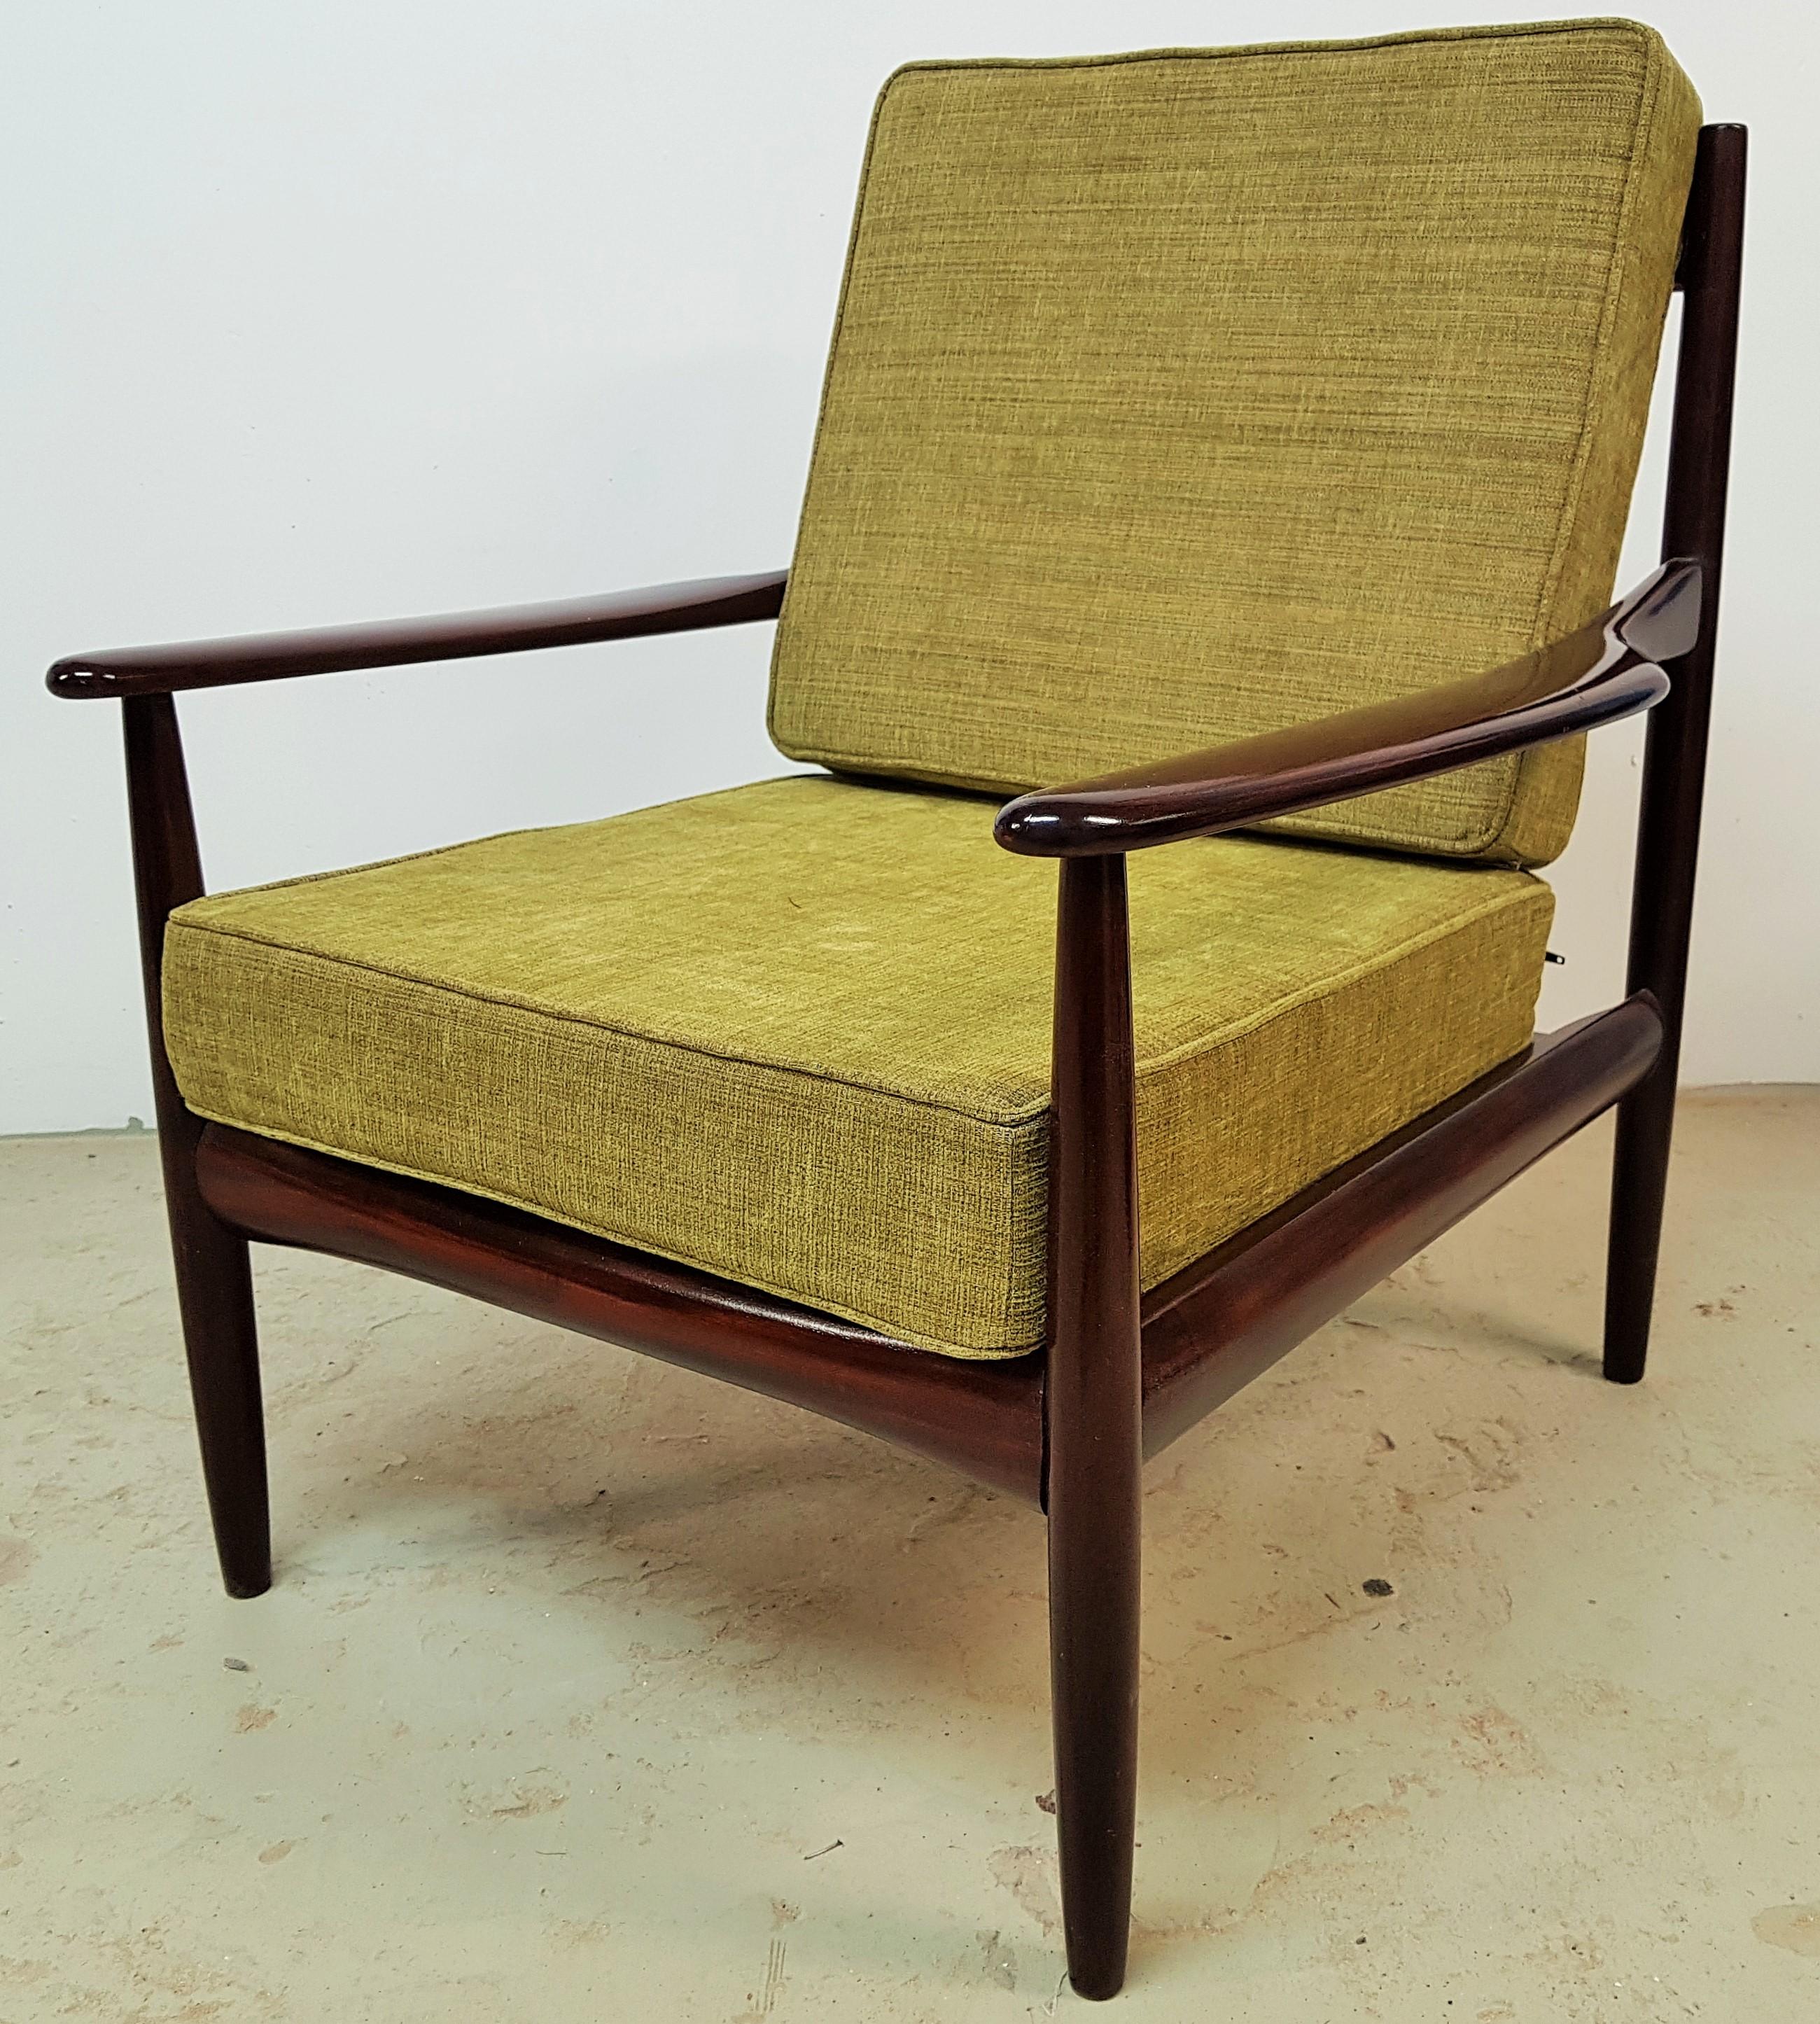 Midcentury Danish Teak Lounge Chair by Grete Jalk 1